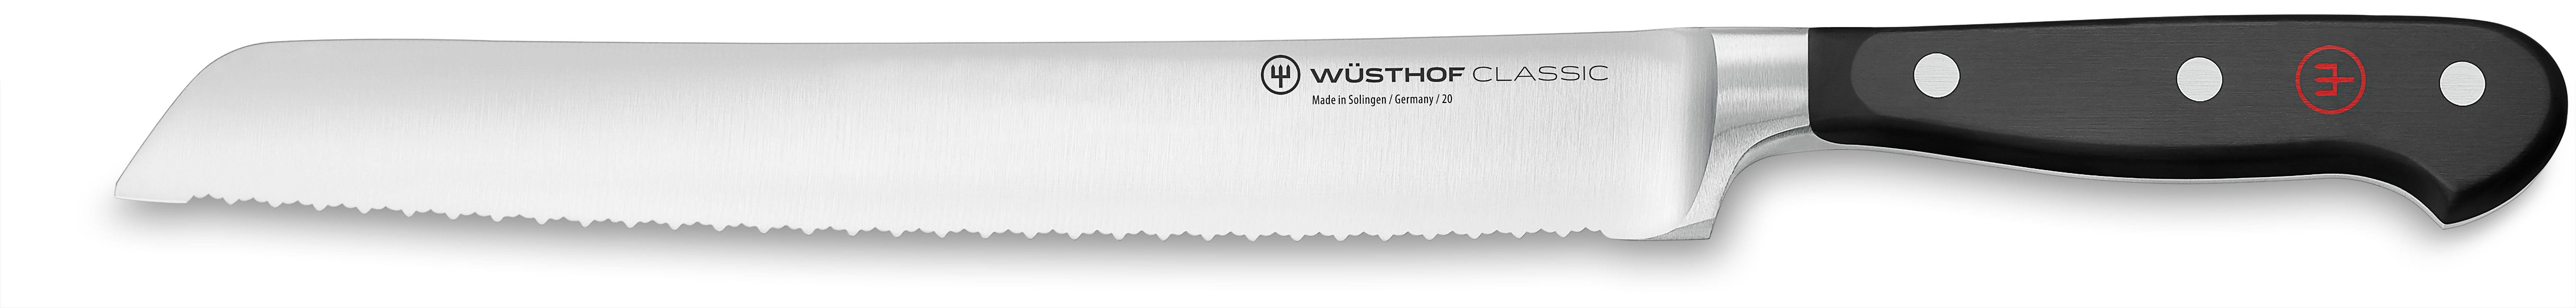 Wüsthof Classic bread knife 23 cm, 1040101123